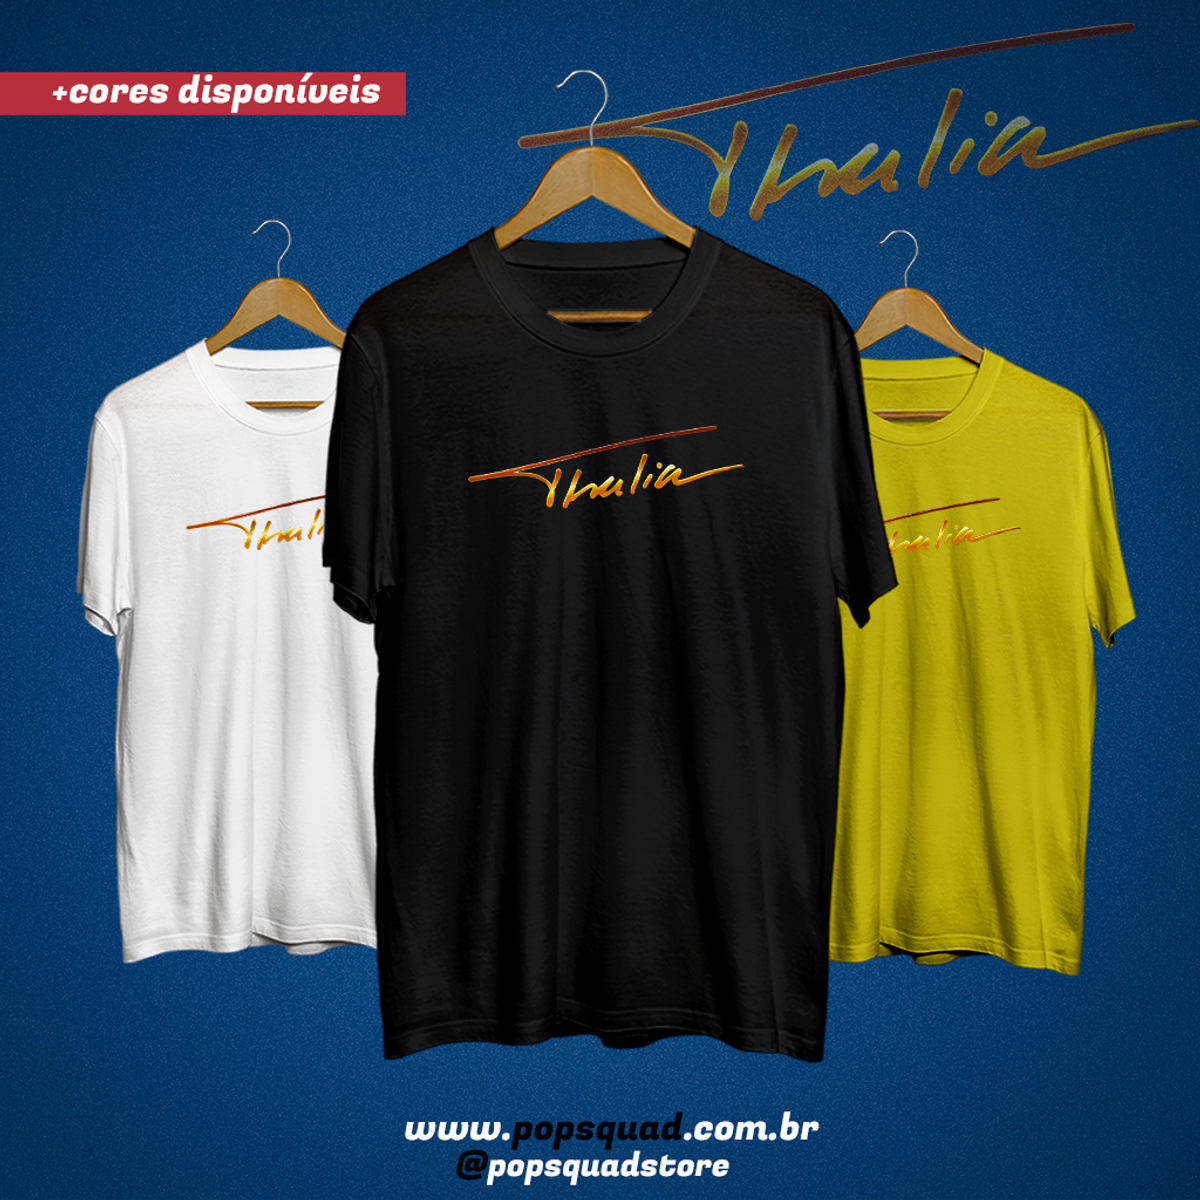 Nome do produto: Camiseta Thalia A Mucha Honra Logo